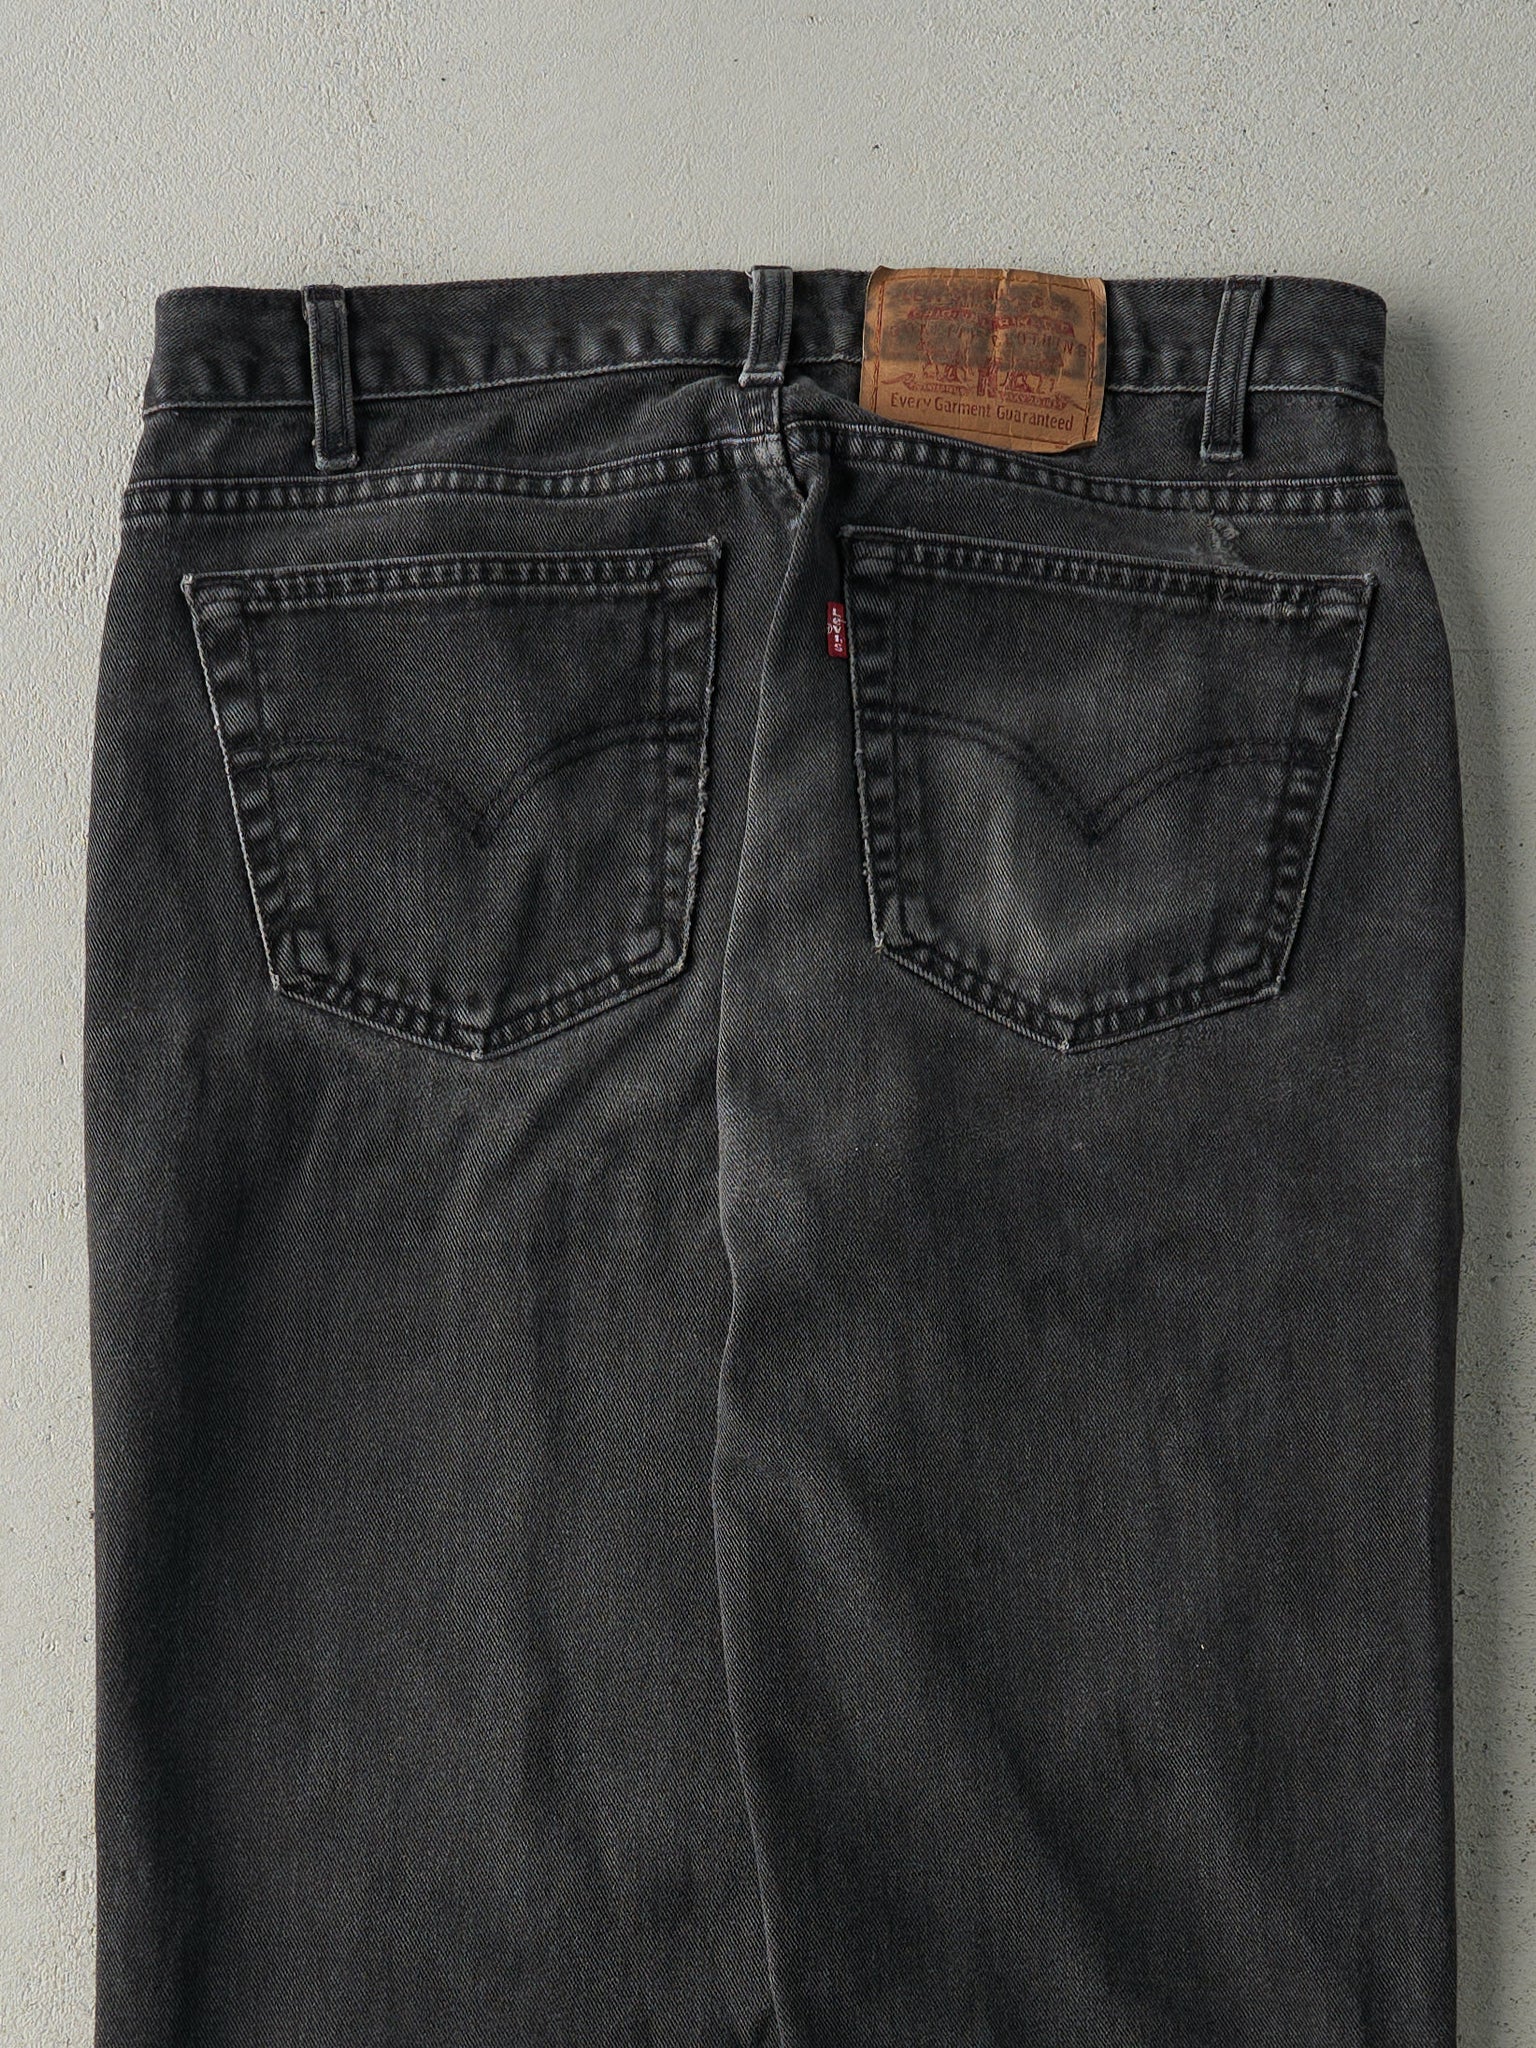 Vintage 90s Faded Black Levi's 516 Pants (32x29.5)